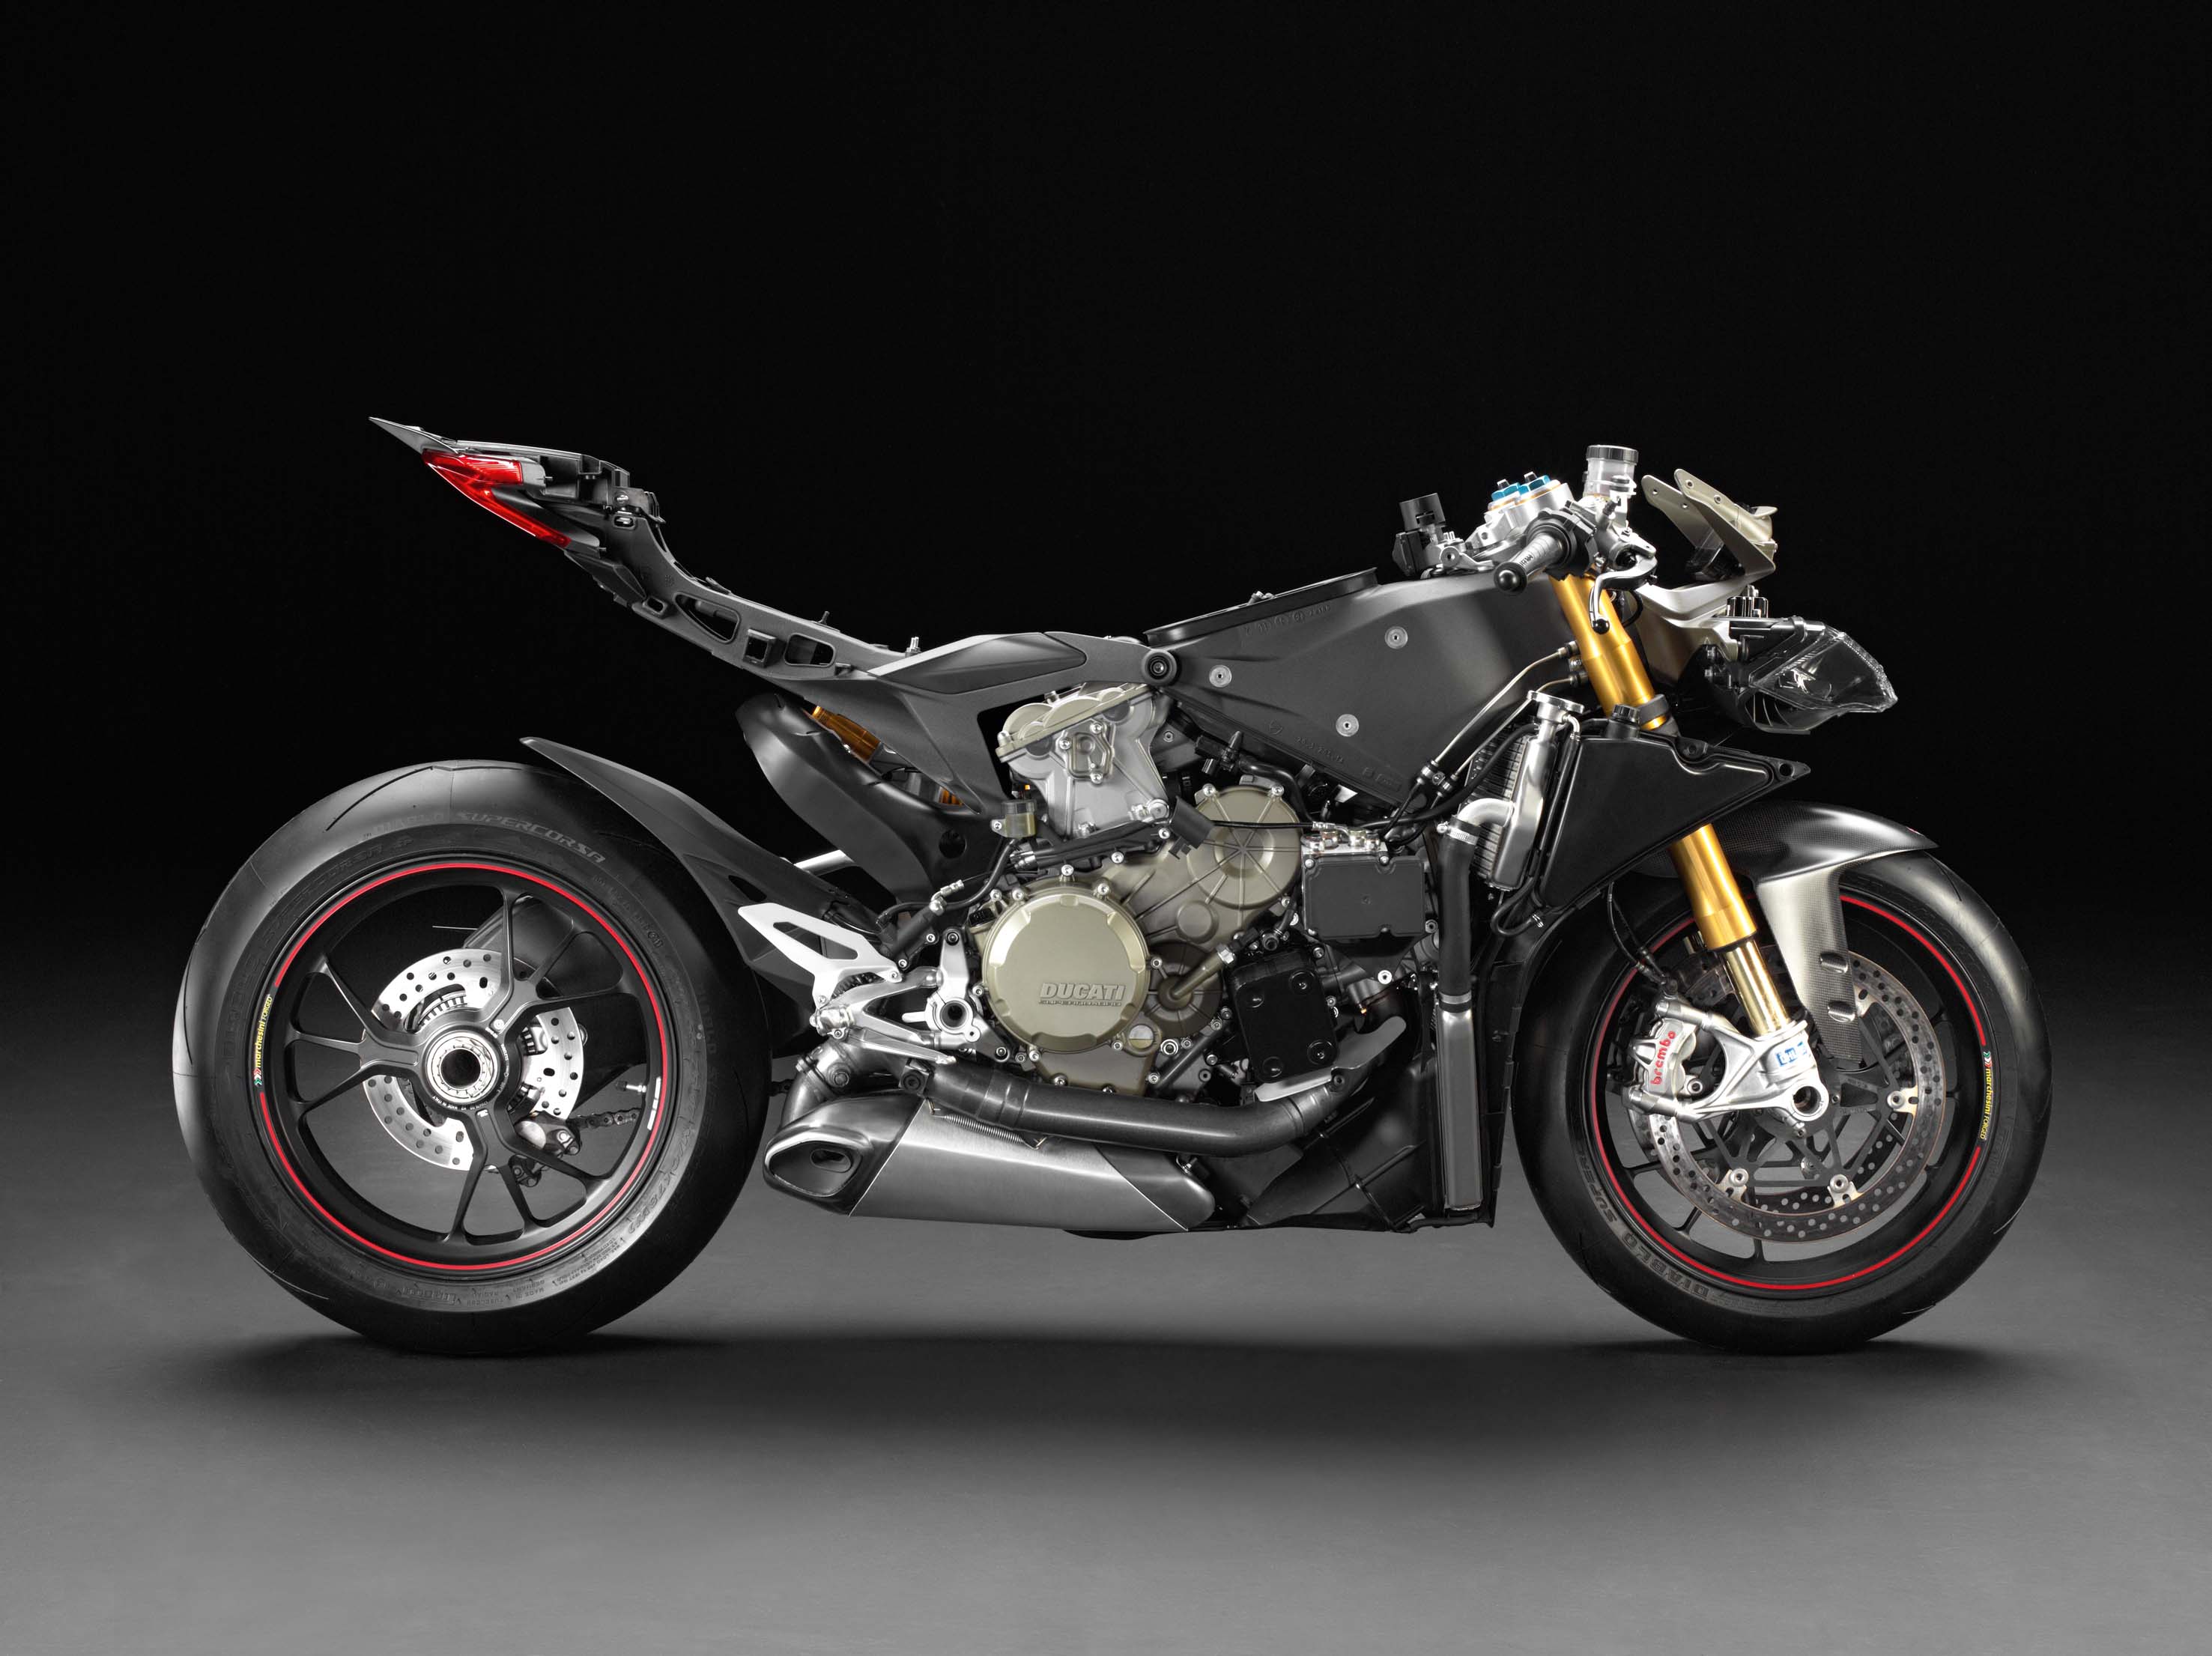 [Imagen: Ducati-1199-Panigale-no-fairings-01.jpg]